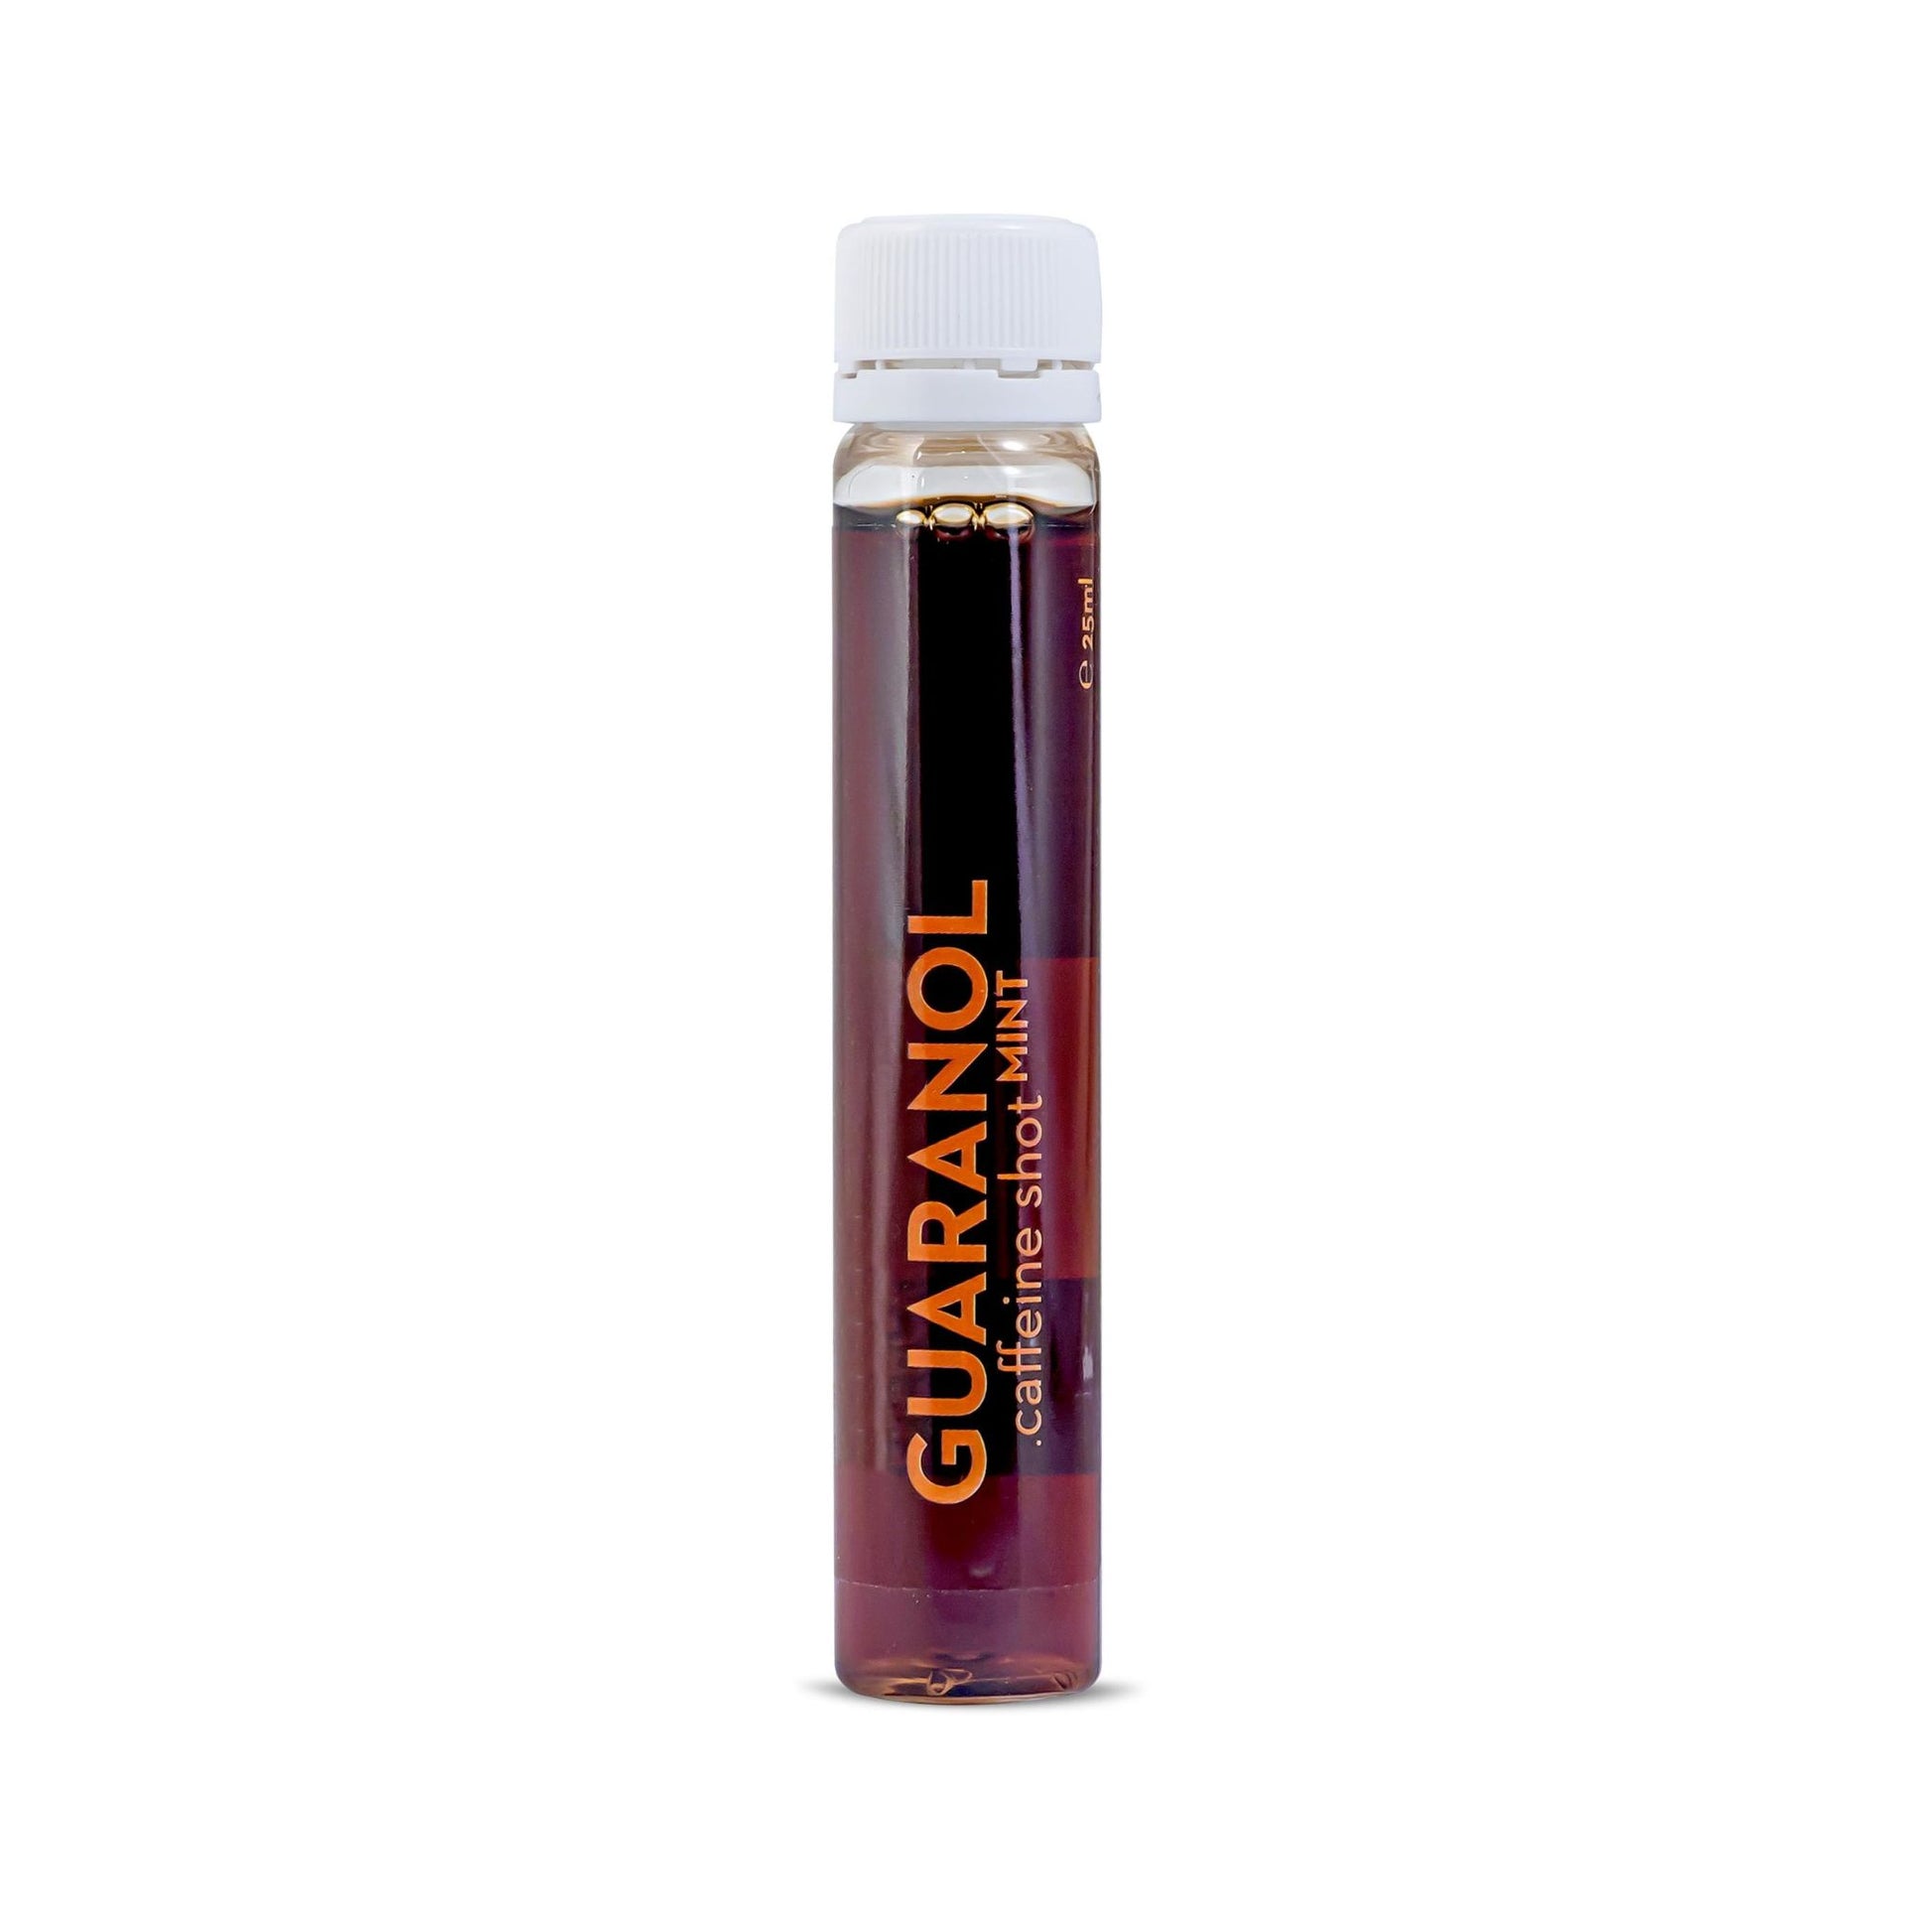 Sanas guaranol cafeine shot mint